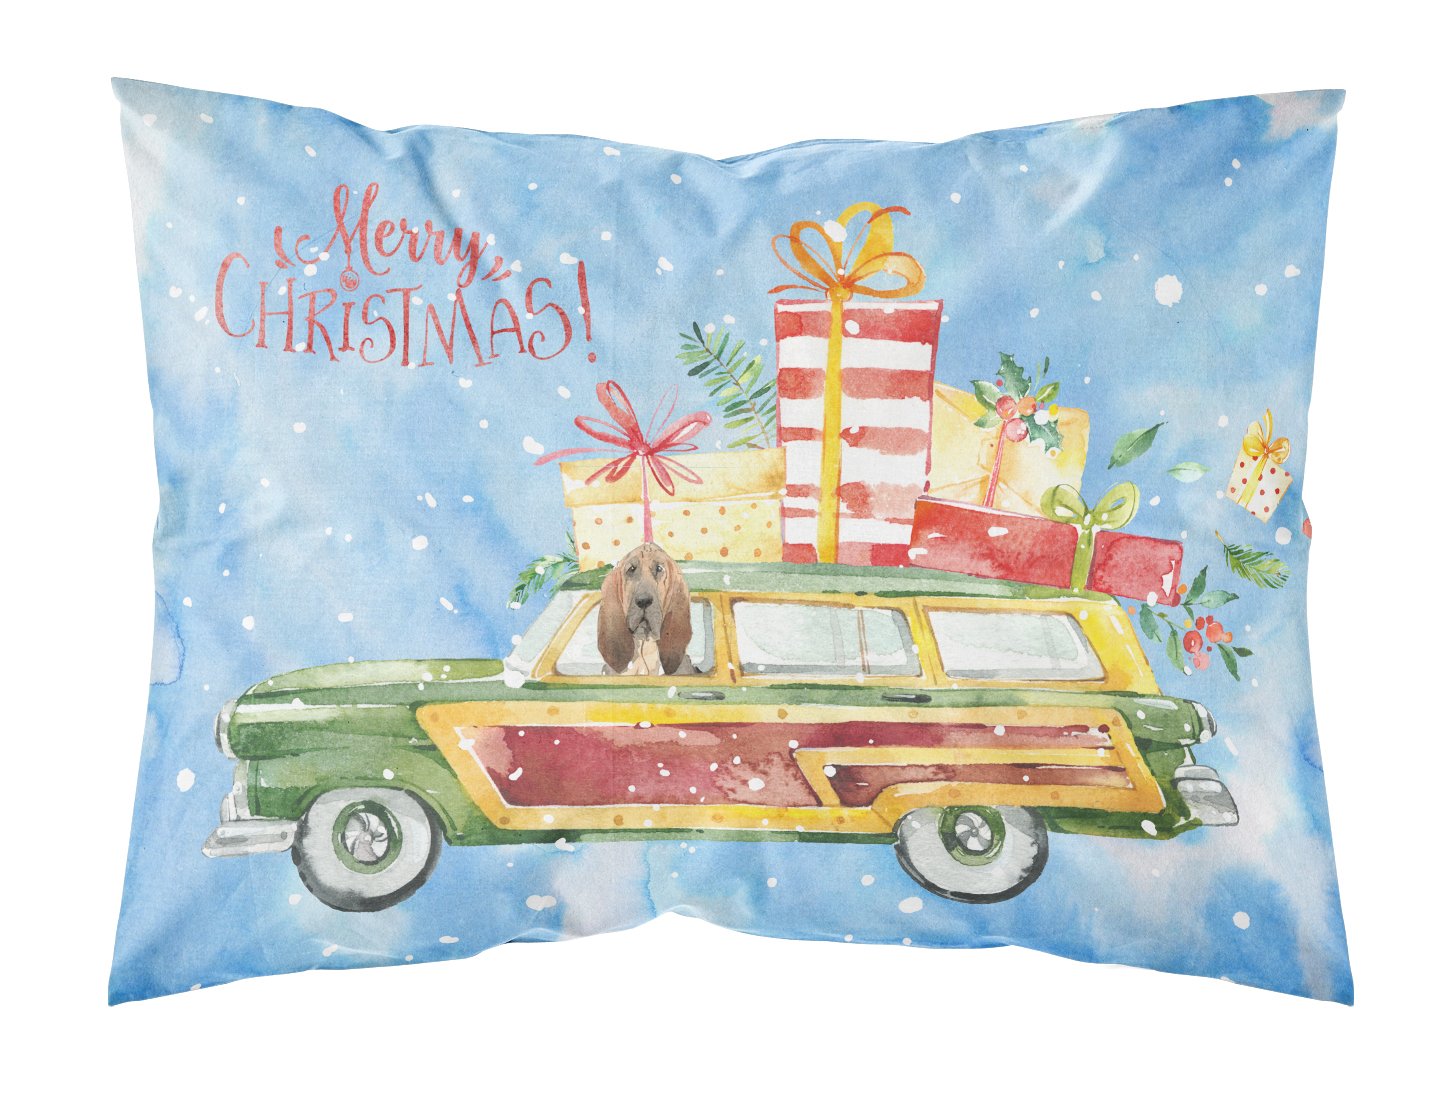 Merry Christmas Bloodhound Fabric Standard Pillowcase CK2396PILLOWCASE by Caroline's Treasures